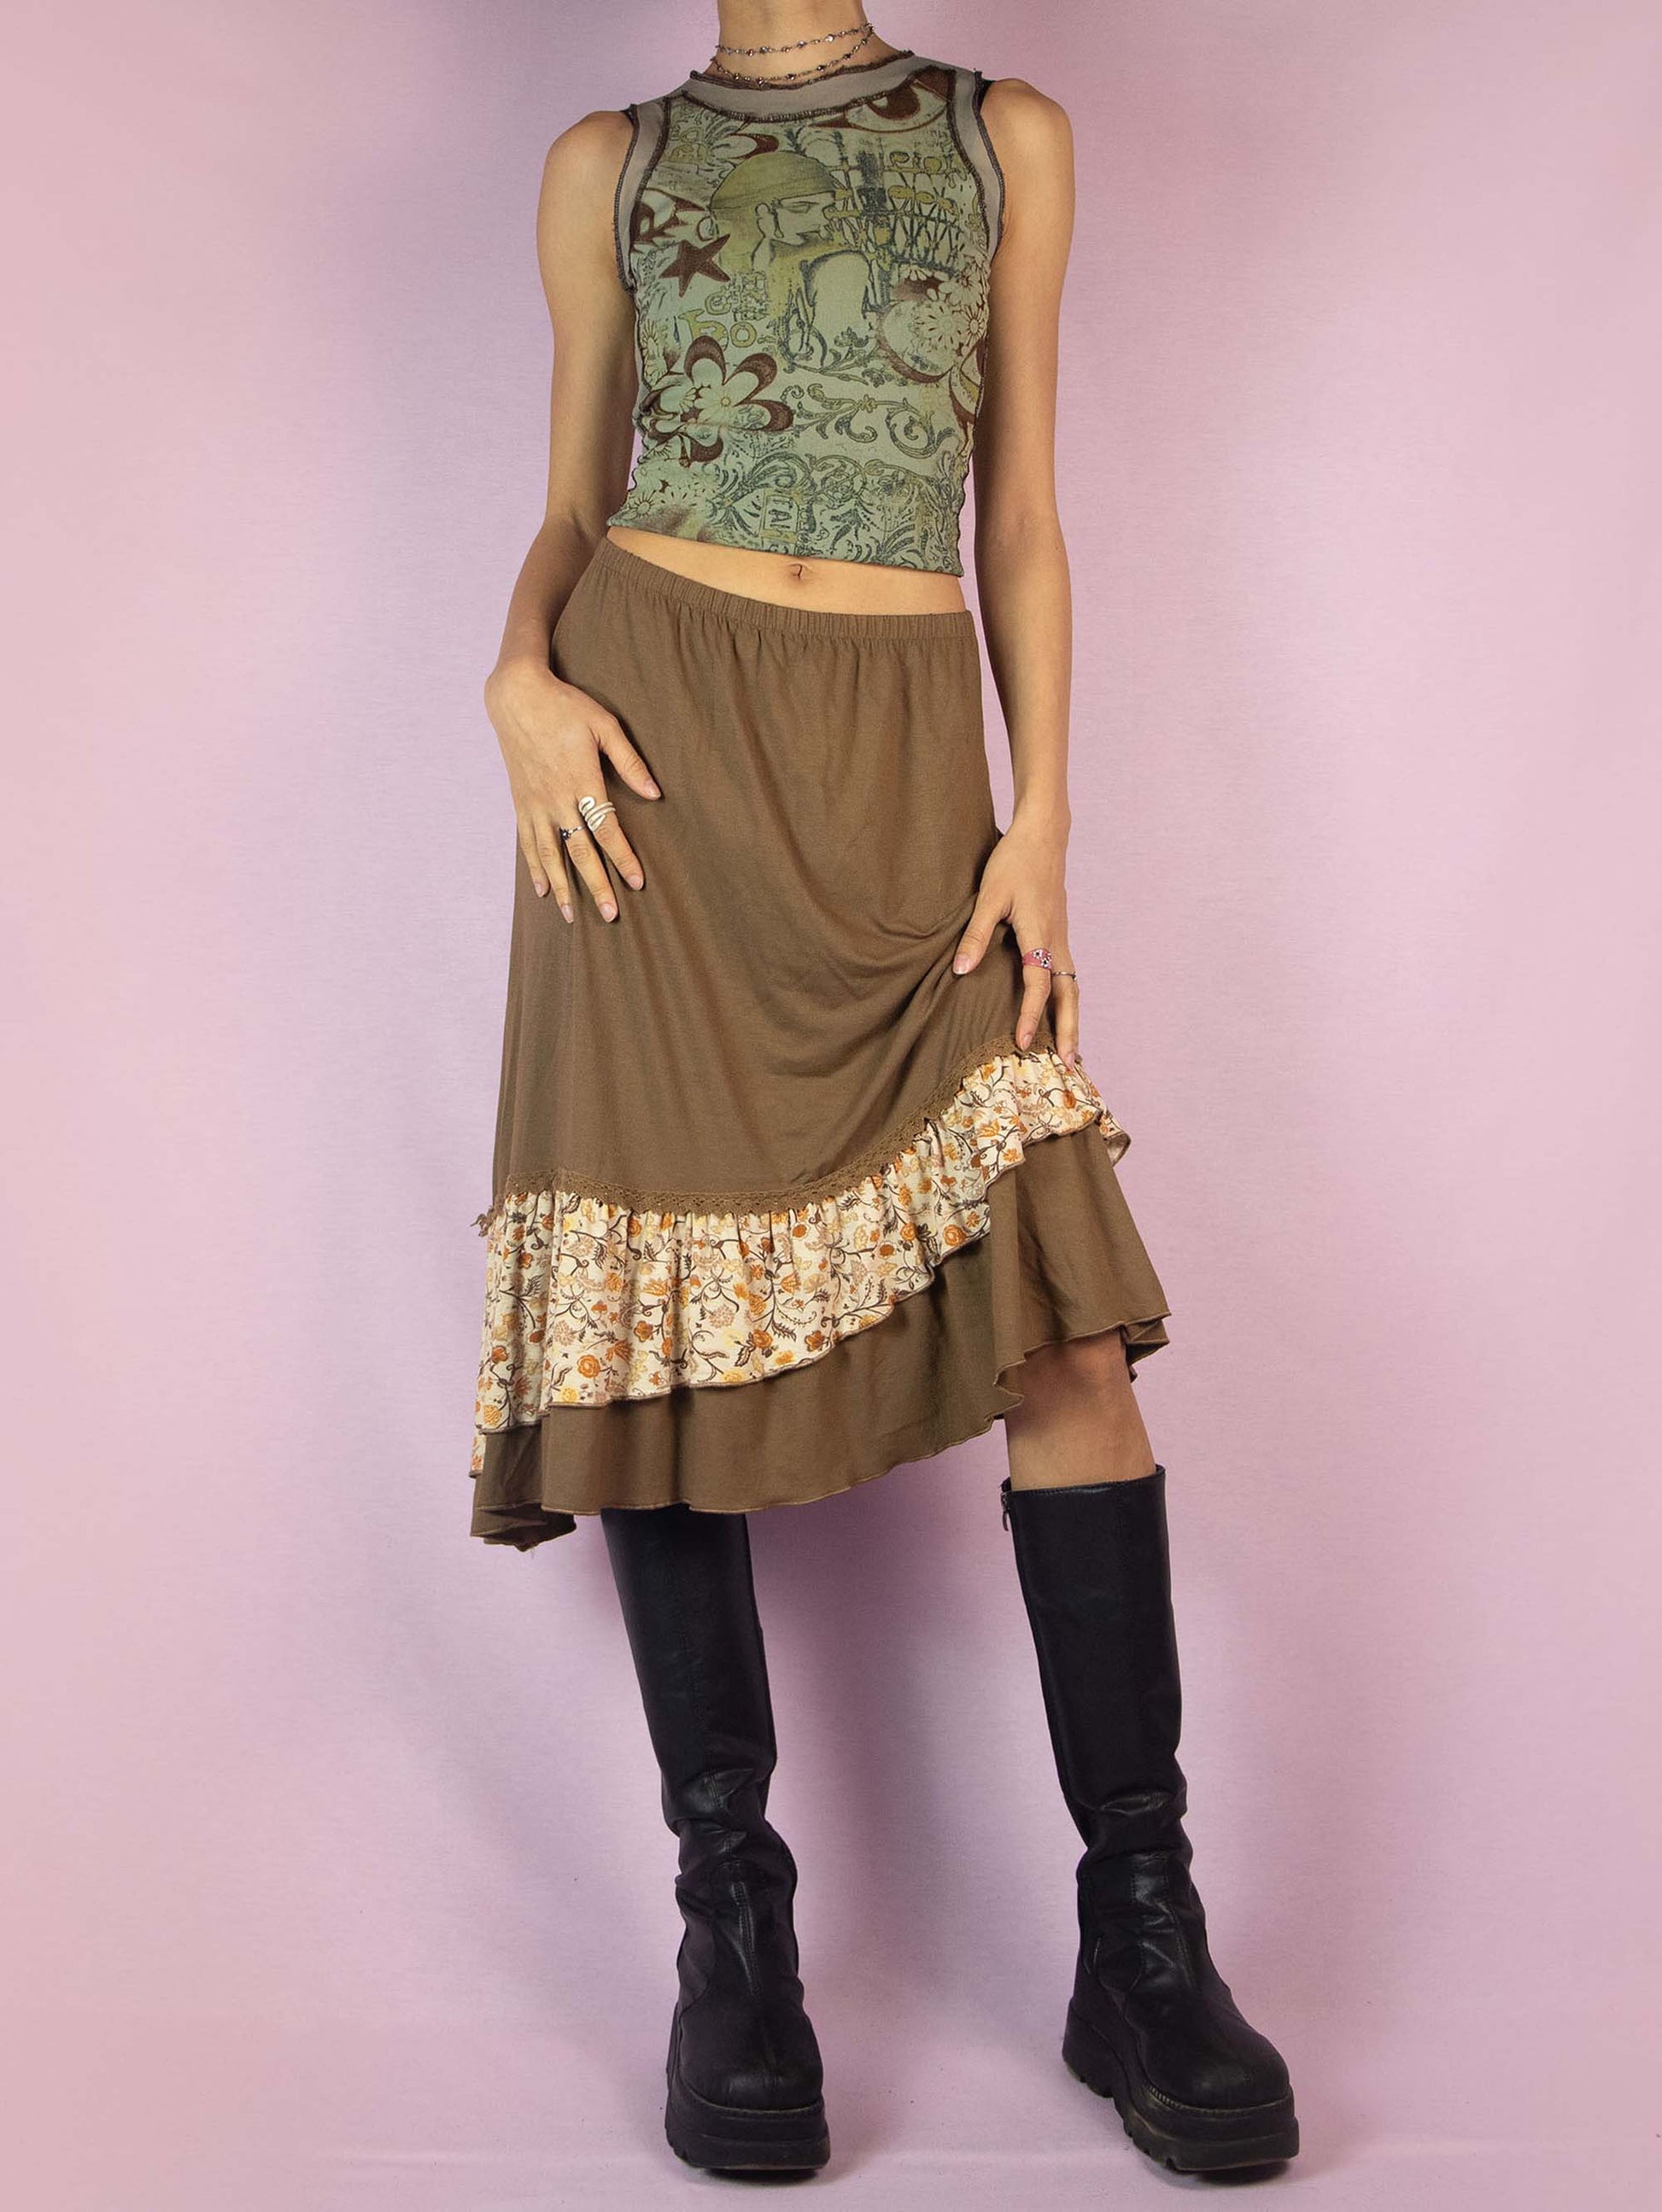 The Y2K Asymmetric Brown Midi Skirt is a vintage 2000s fairy grunge cottagecore style skirt with an asymmetric floral print ruffle hem and elastic waist.